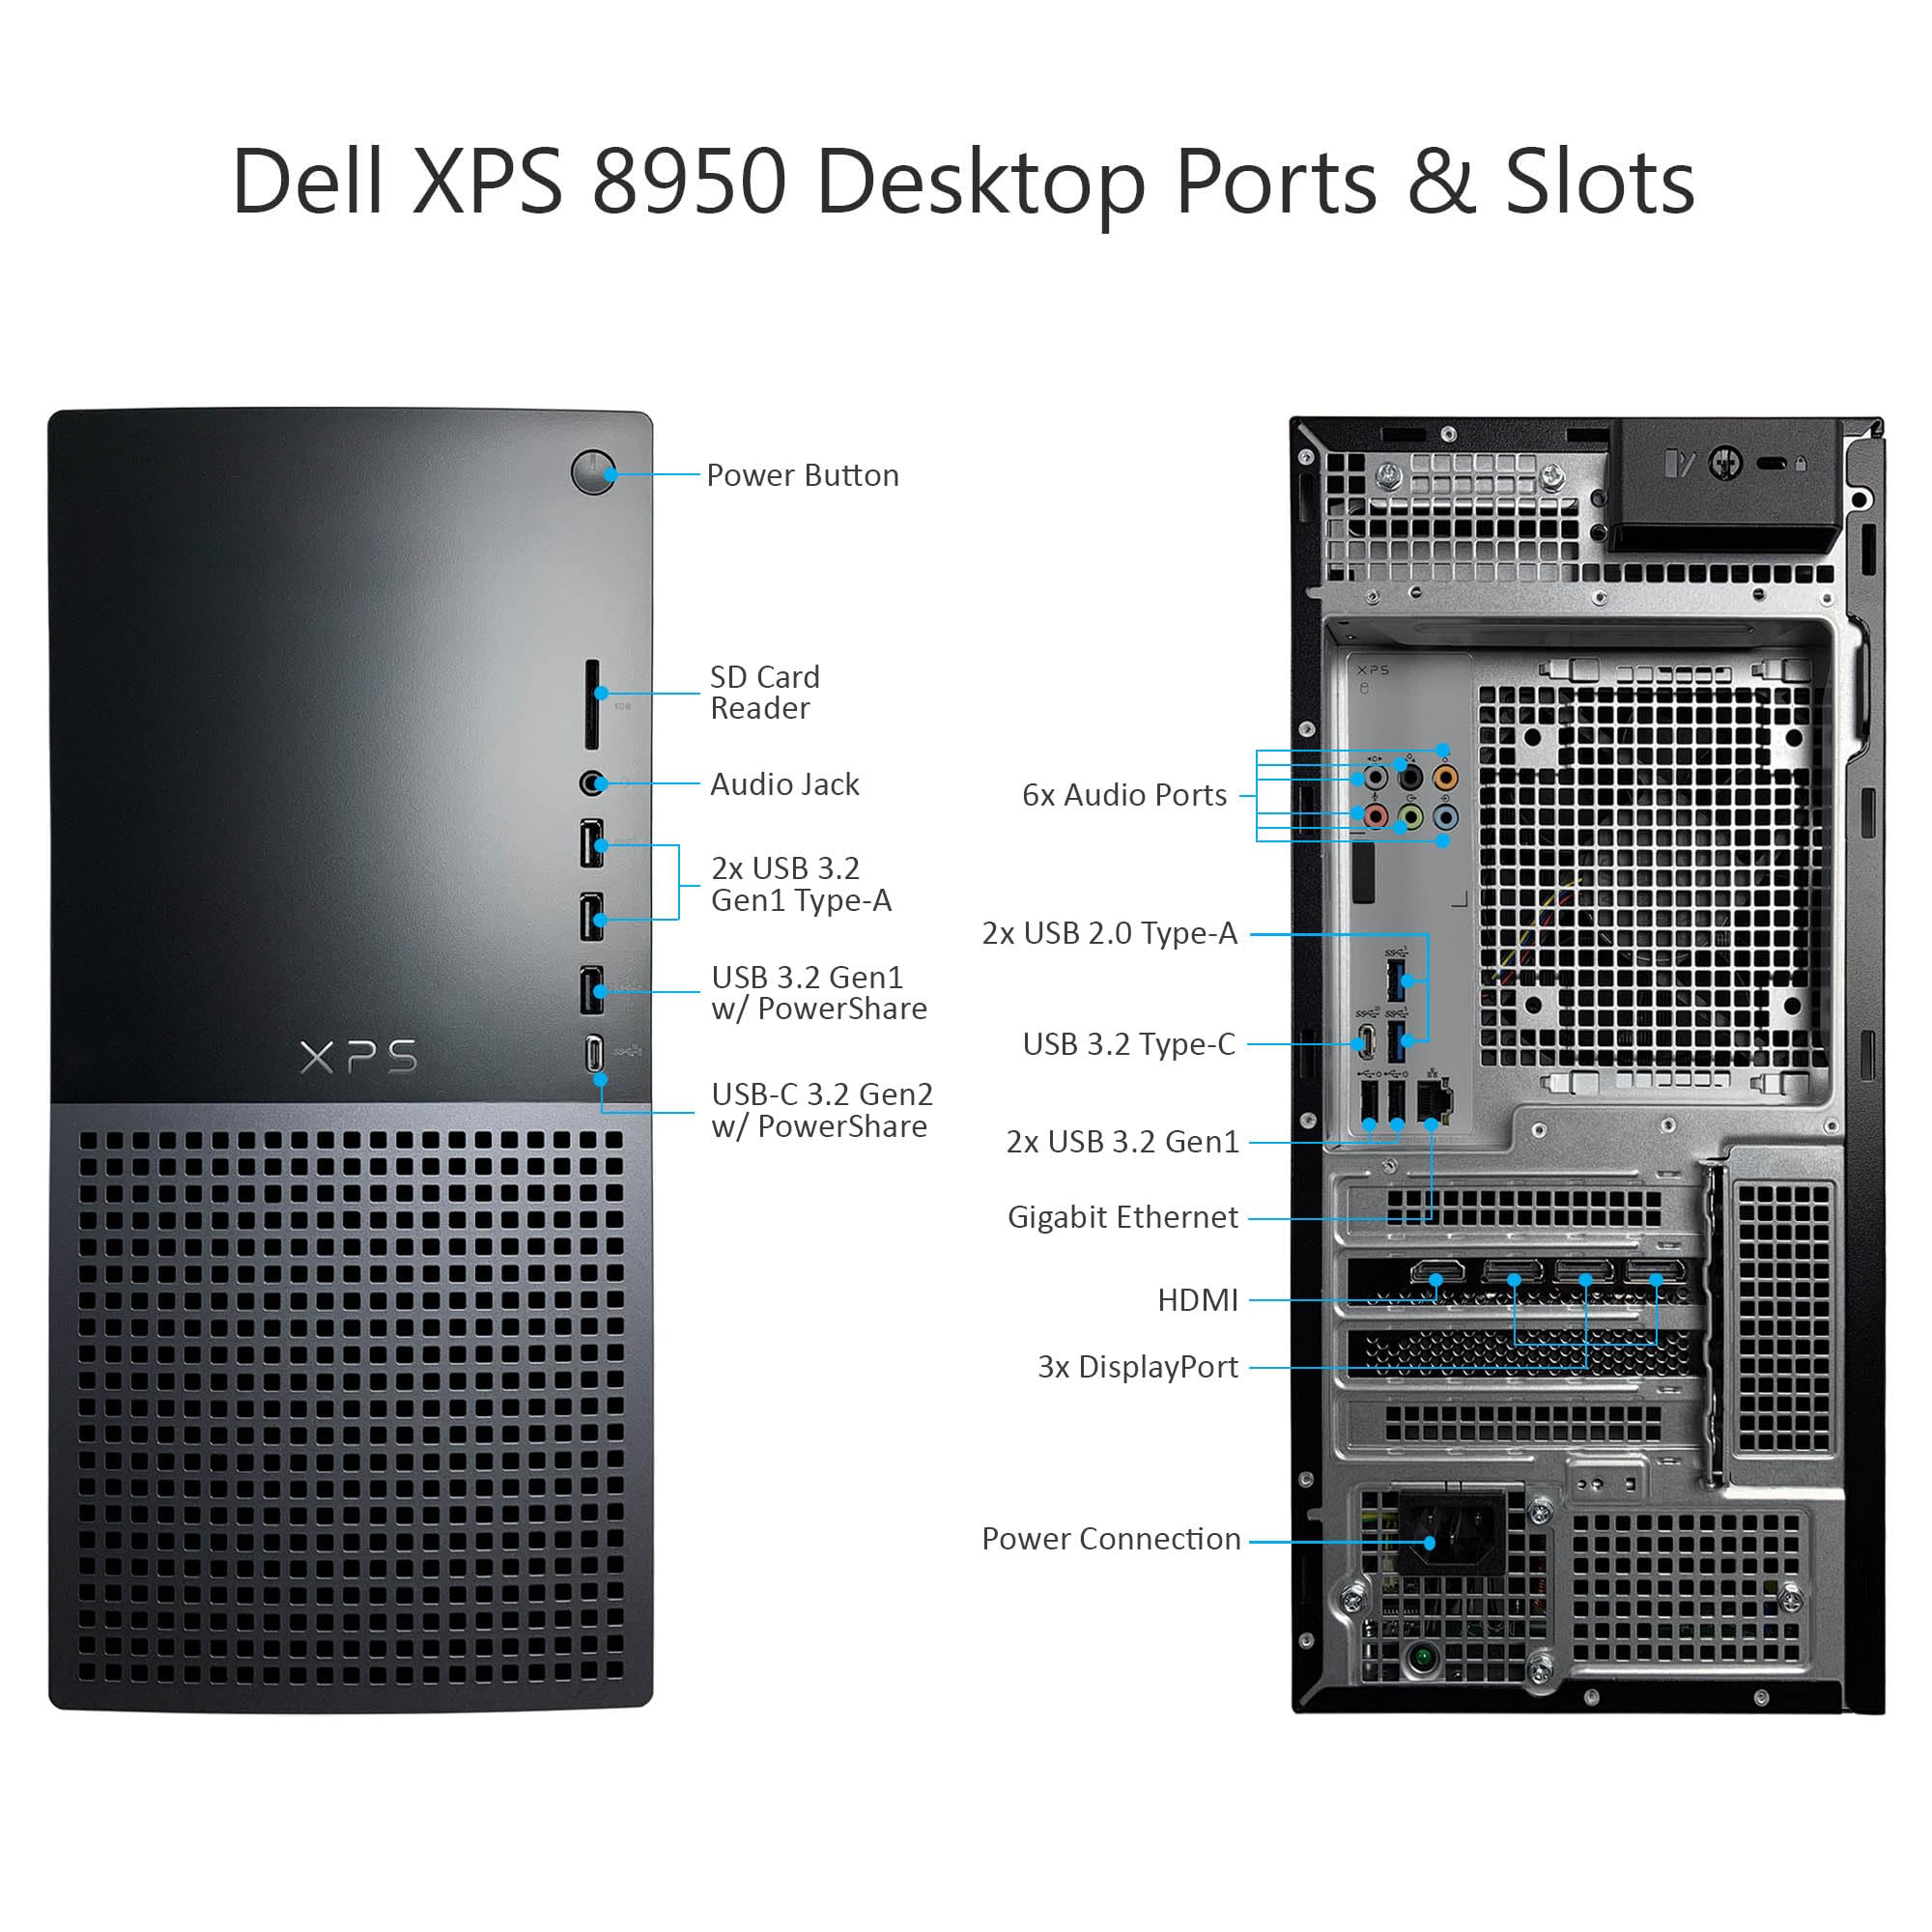 Dell XPS 8950 Gaming Desktop Computer - 12th Gen Intel Core i7-12700 up to 4.90 GHz CPU, 32GB DDR5 RAM, 2TB NVMe SSD, AMD Radeon RX 6700XT 12GB, Killer Wi-Fi 6, Windows 11 Pro